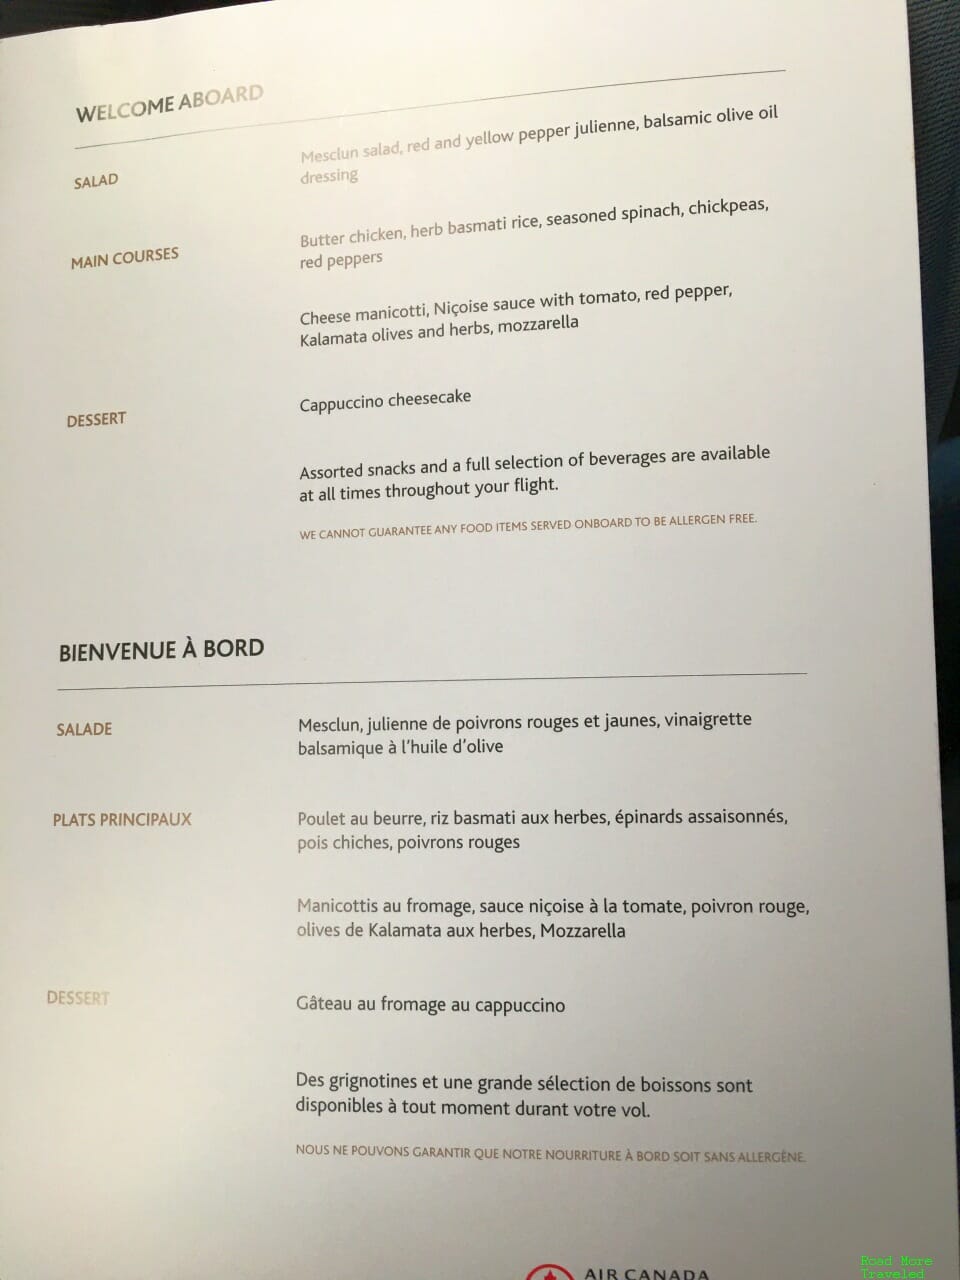 Air Canada B789 Premium Economy food menu